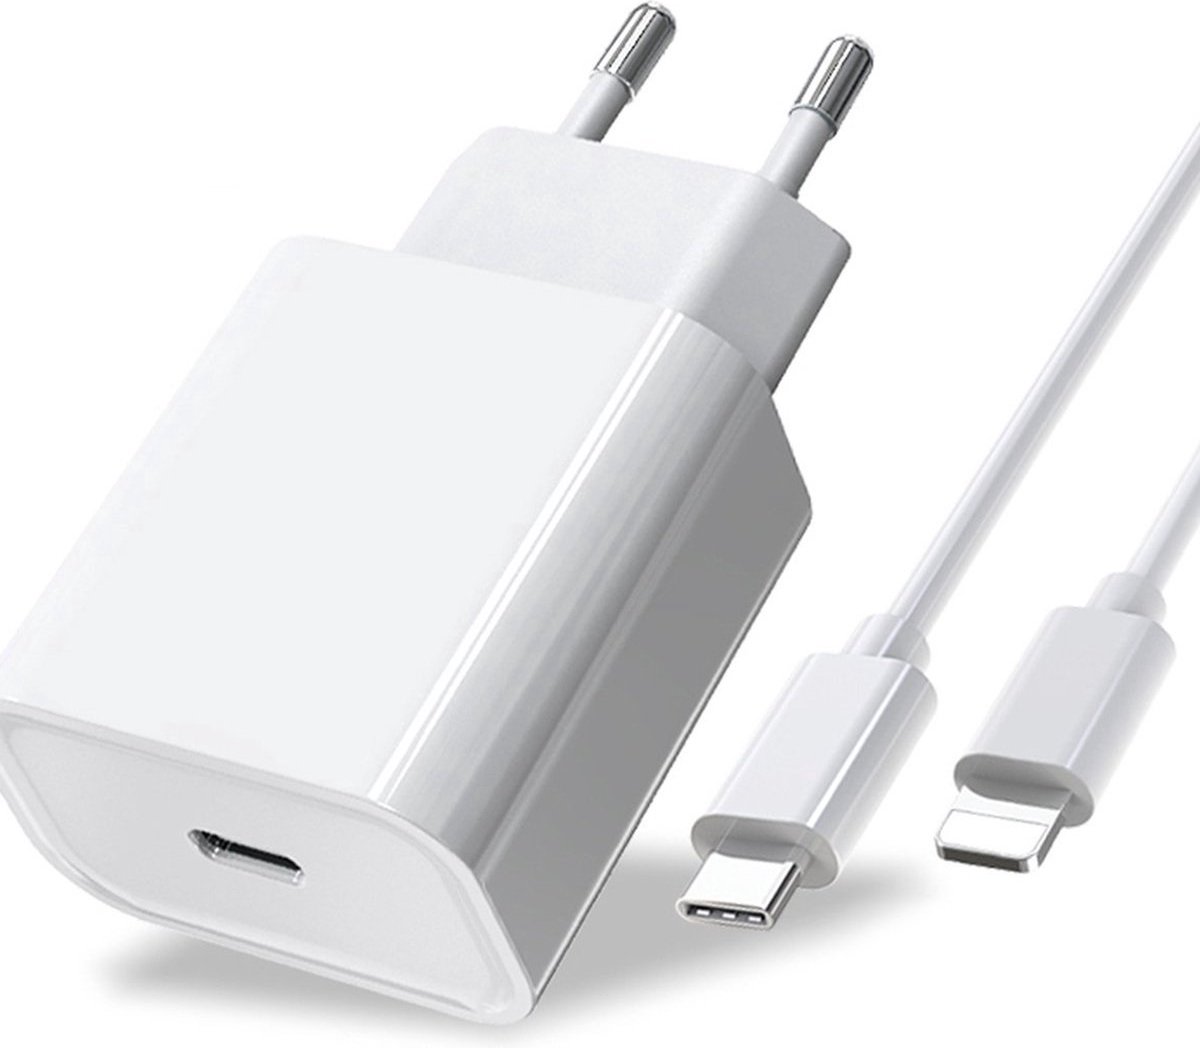 Snellader iPhone met 1m kabel - 20W oplader inclusief Oplaadkabel van 1 meter - USB-C naar lightning (iPhone) kabel 1m - 20W snellader USB-C - Merkloos